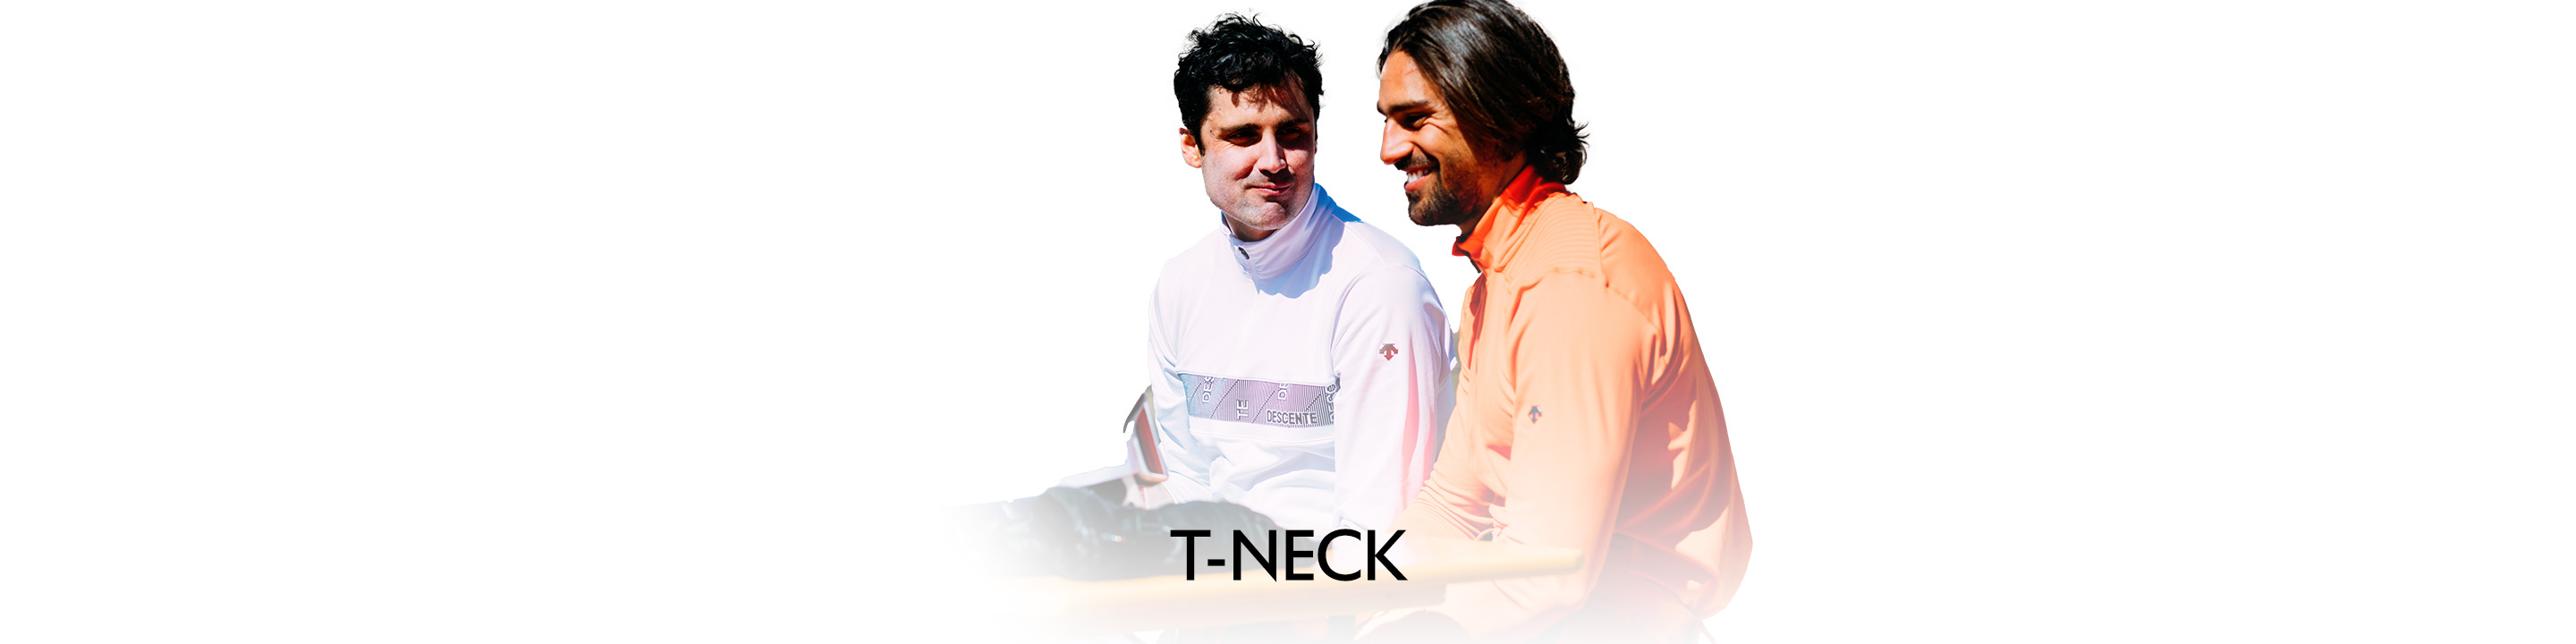 T-NECK banner